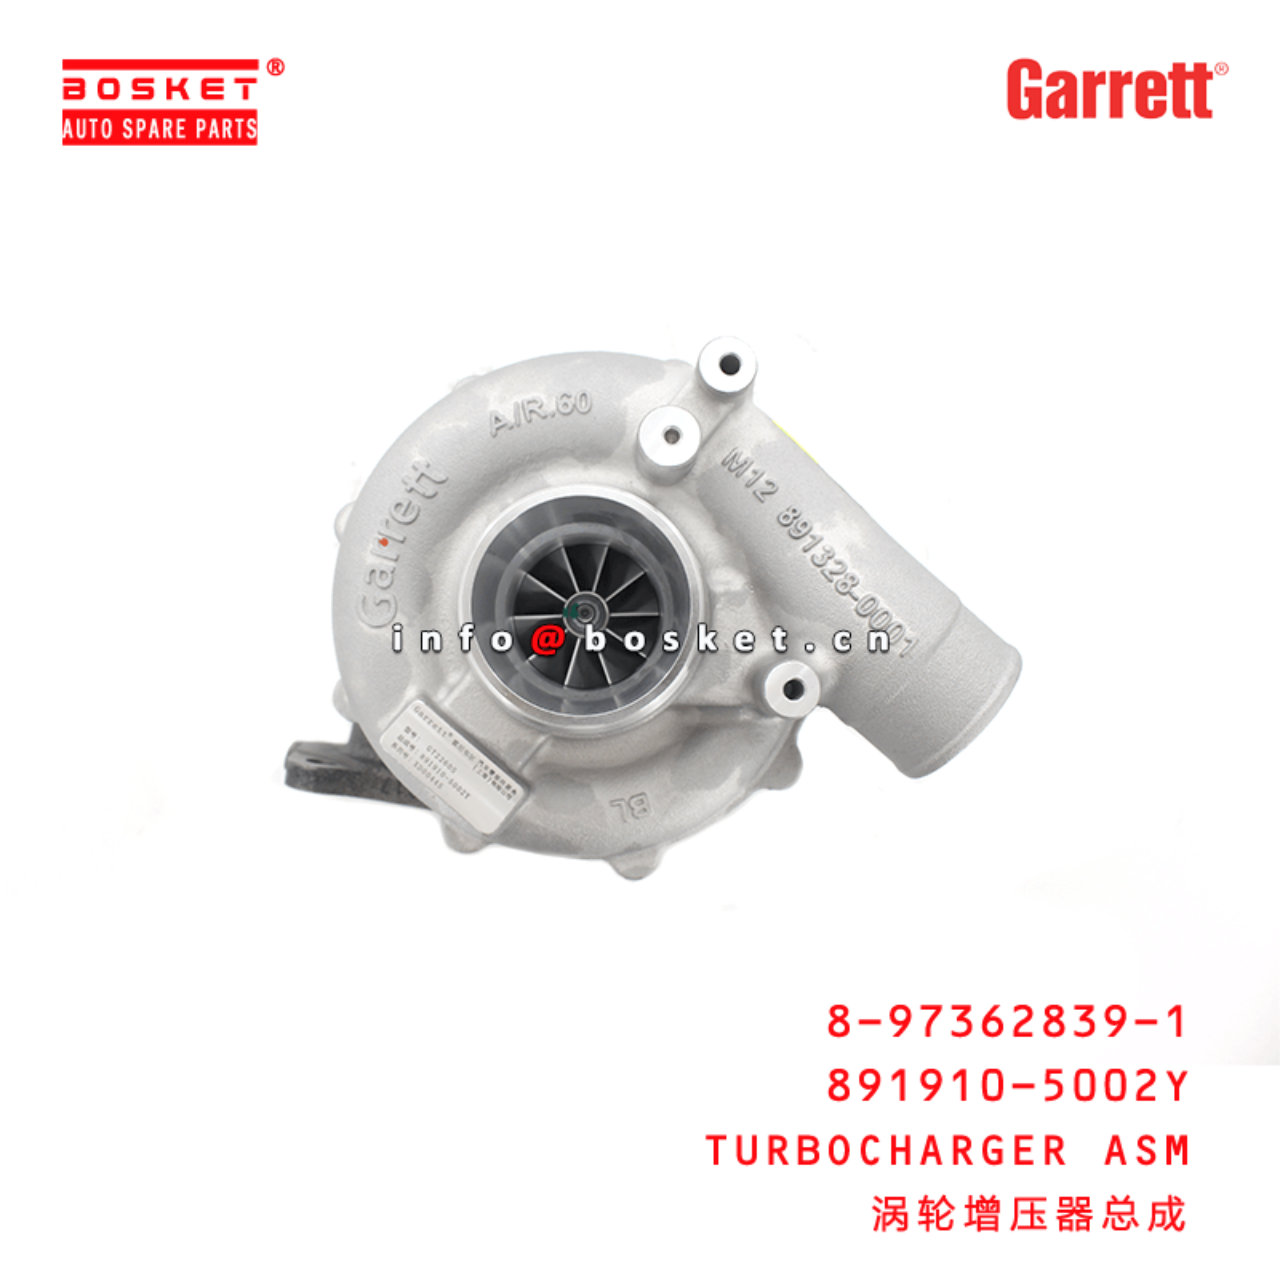 Garrett Genuine 891910-5002Y 8-97362839-1 Turbocharger Assembly Suitable for ISUZU XD 4HK1 